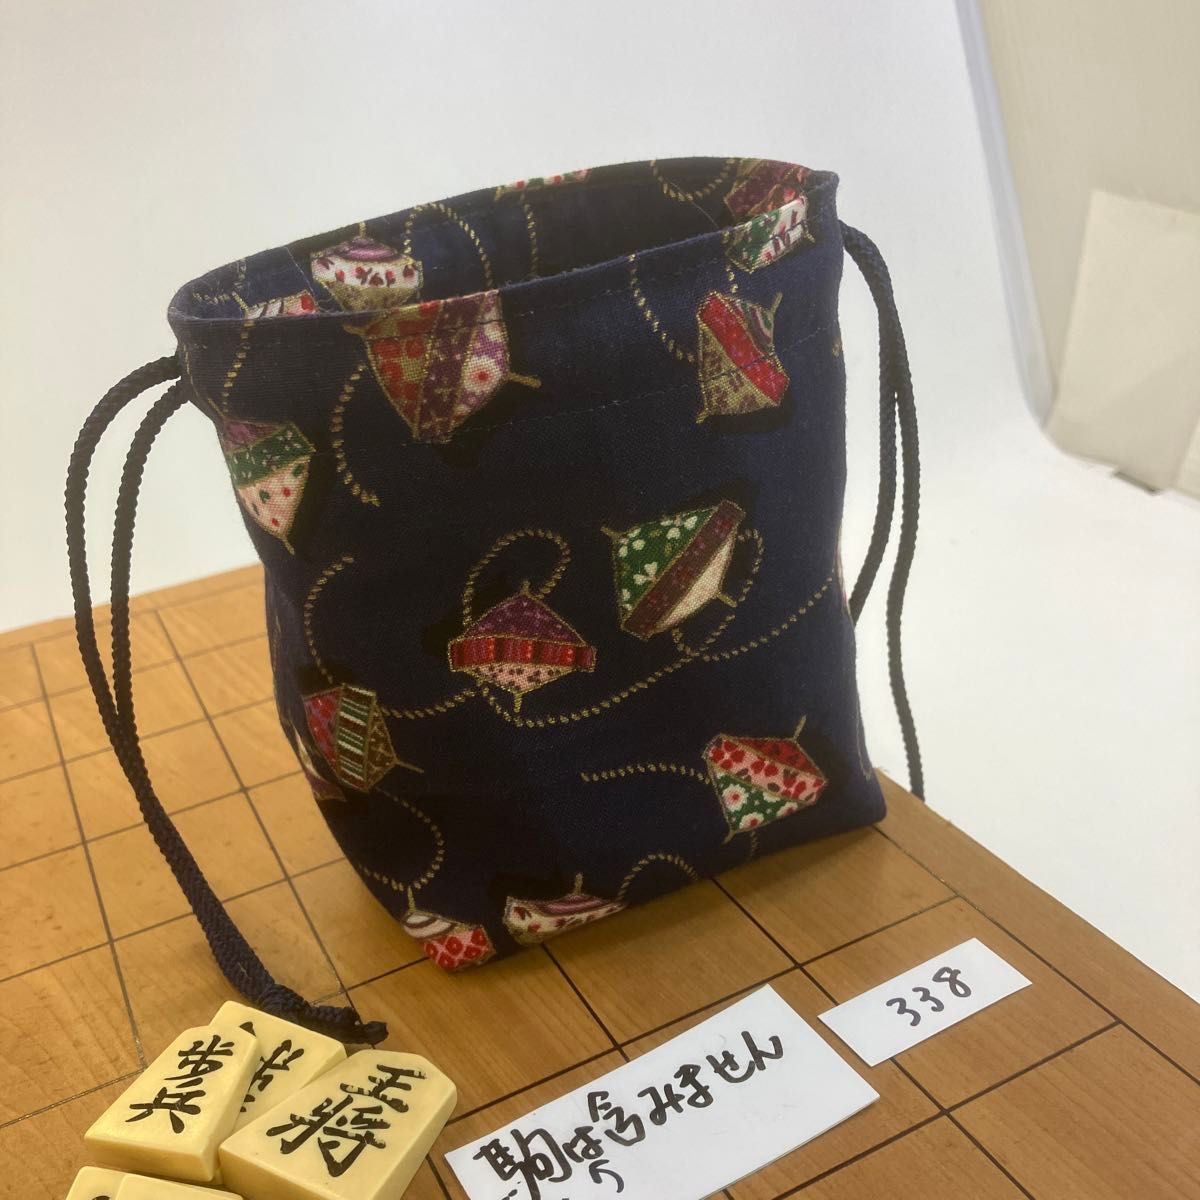 A cute bag . Ａspinning top mark=koma in Jap駒袋:持ち運びが便利な巾着タイプNo.338